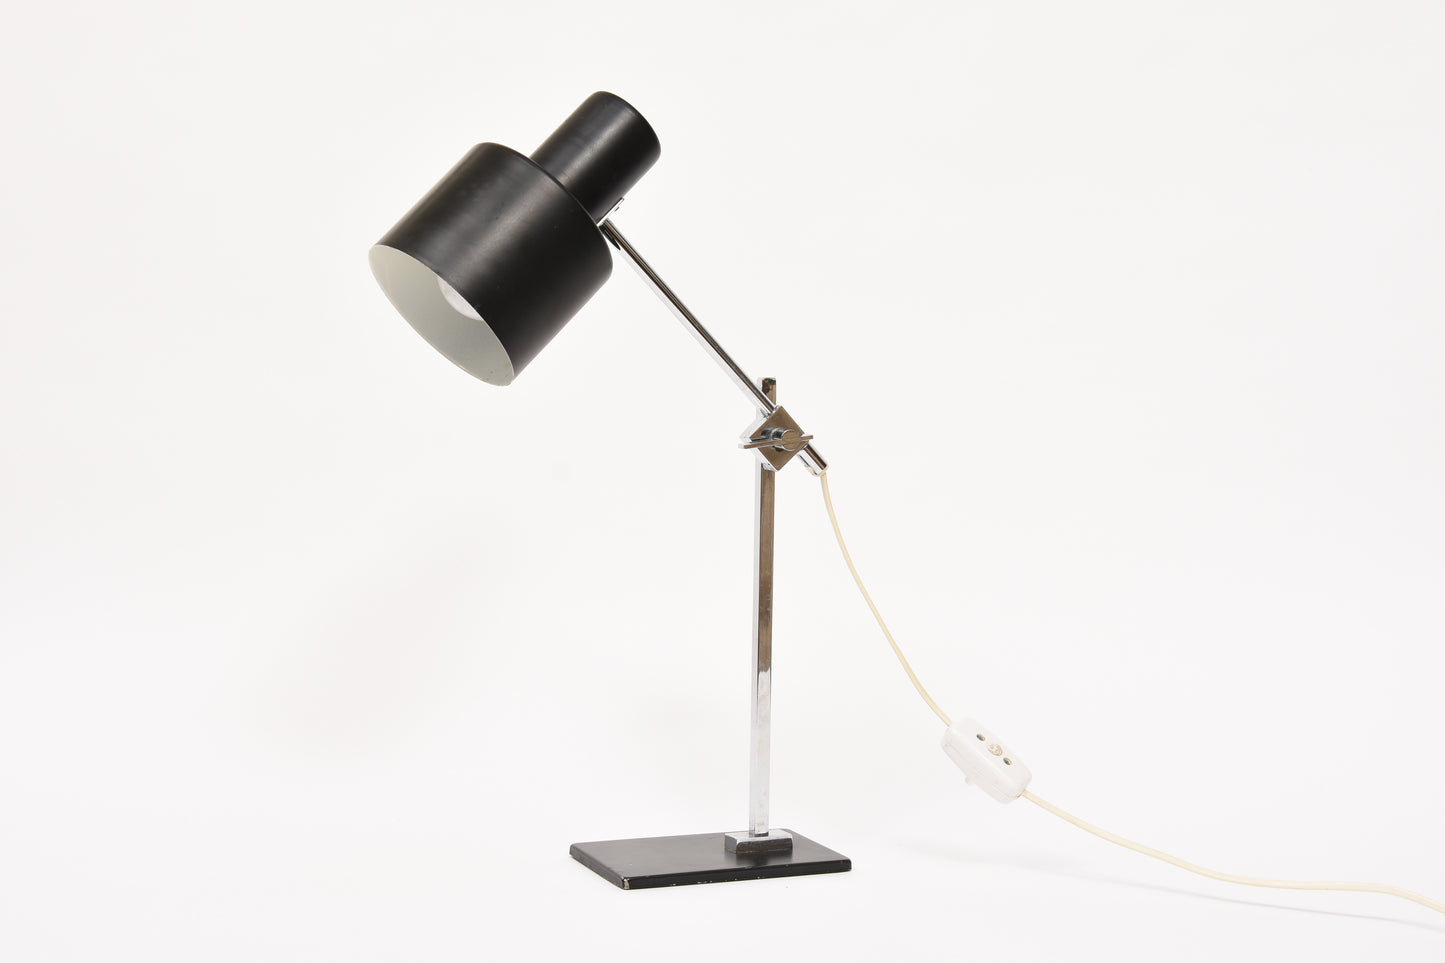 1960s table lamp by Gnosjö Konstmide